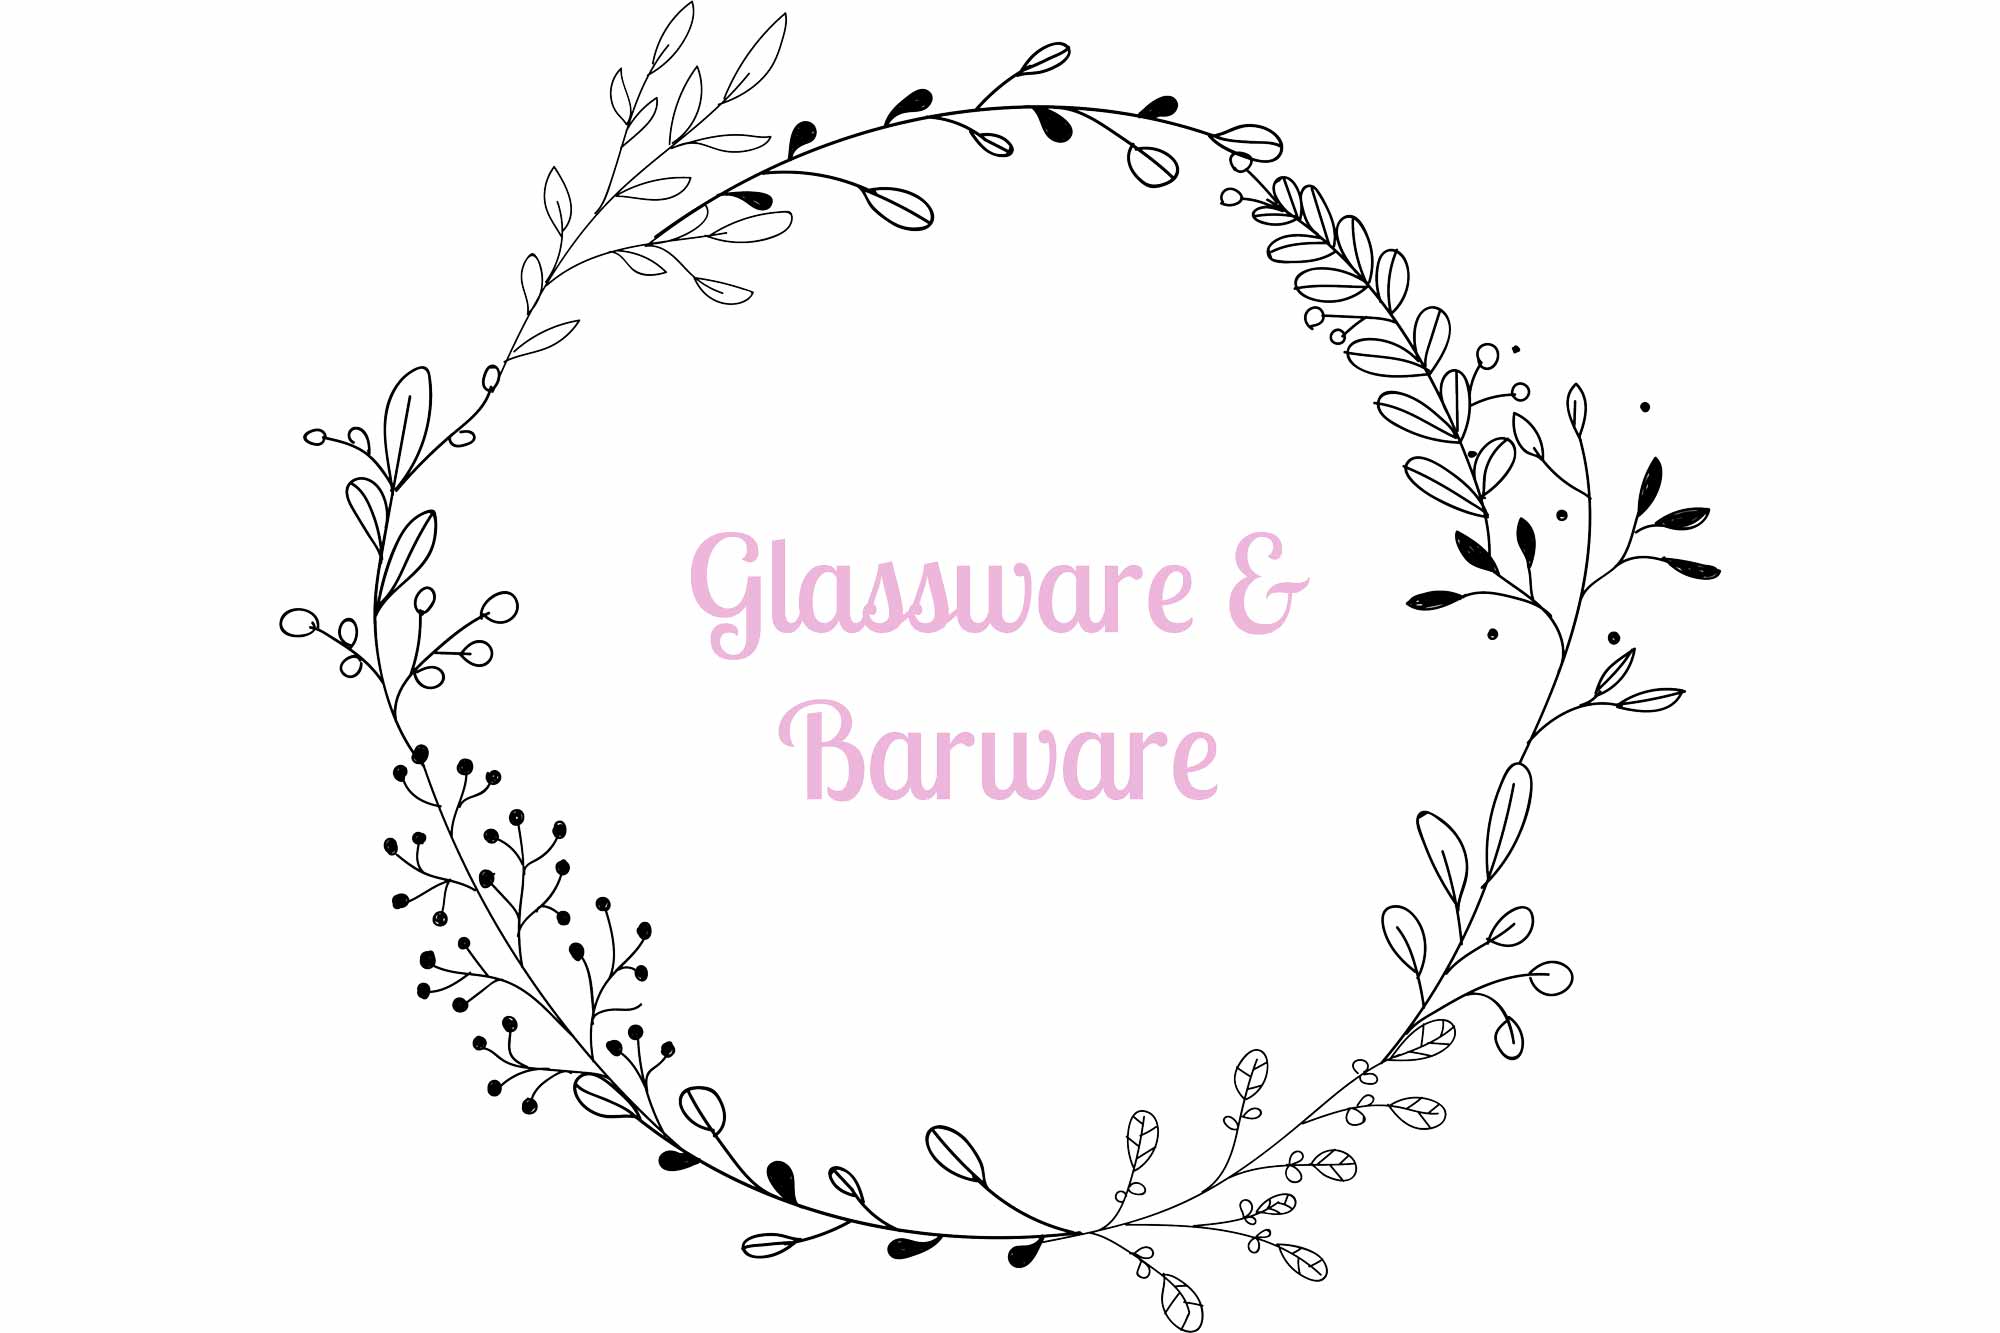 Glassware & Barware